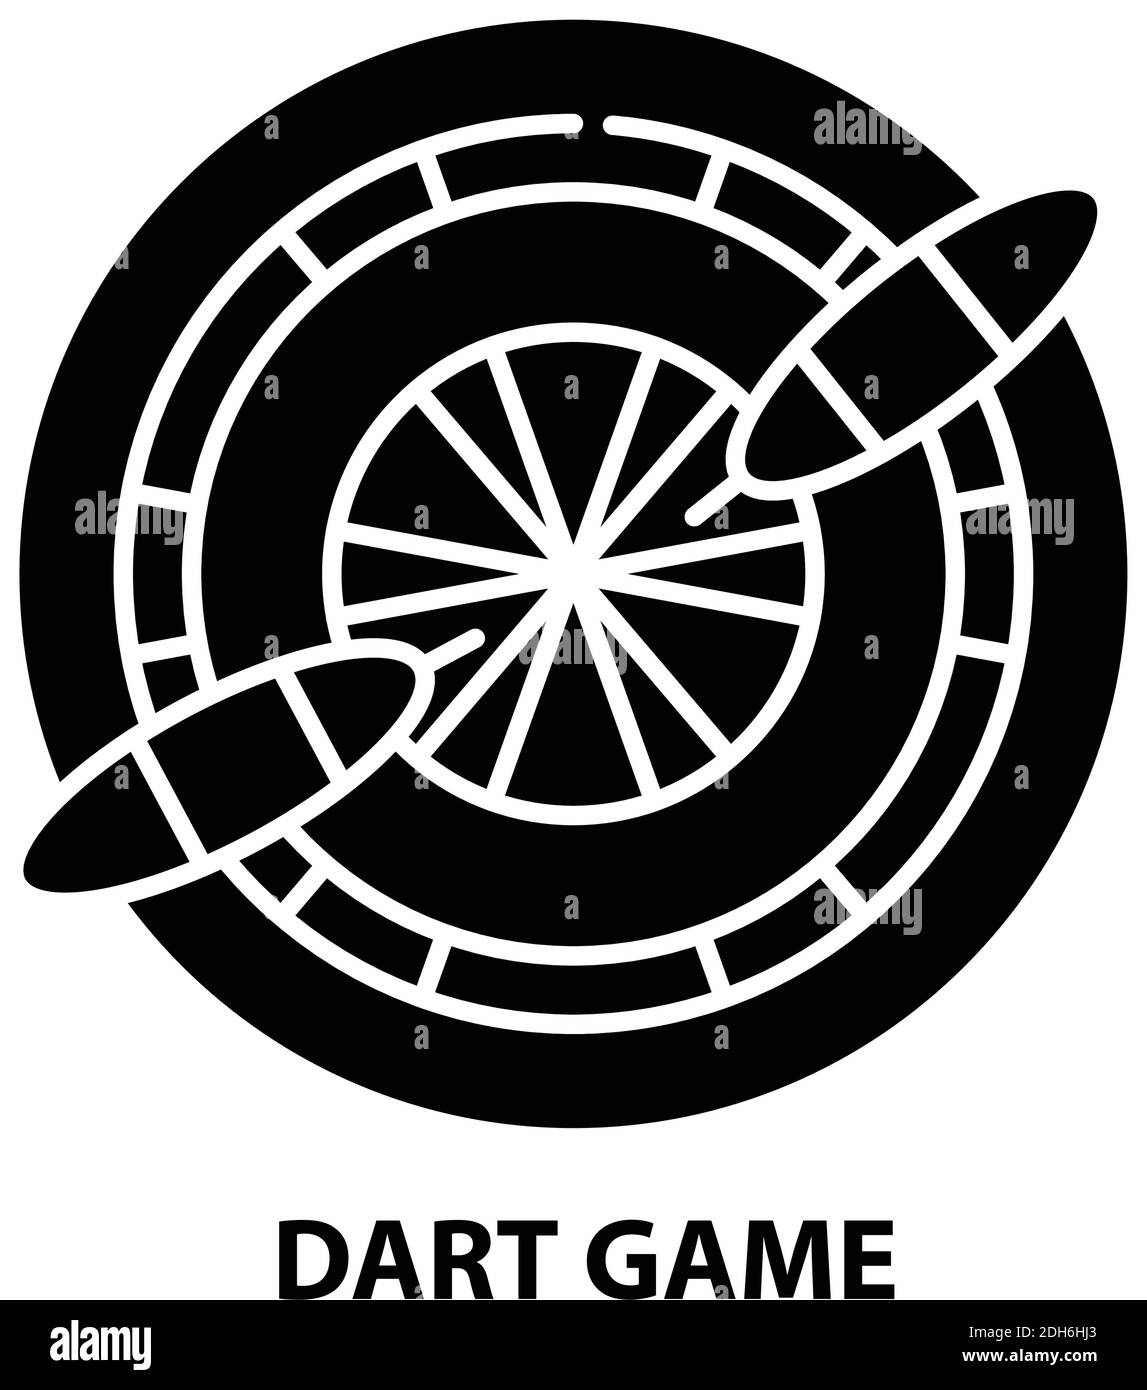 dart game icon, black vector sign with editable strokes, concept illustration Stock Vector